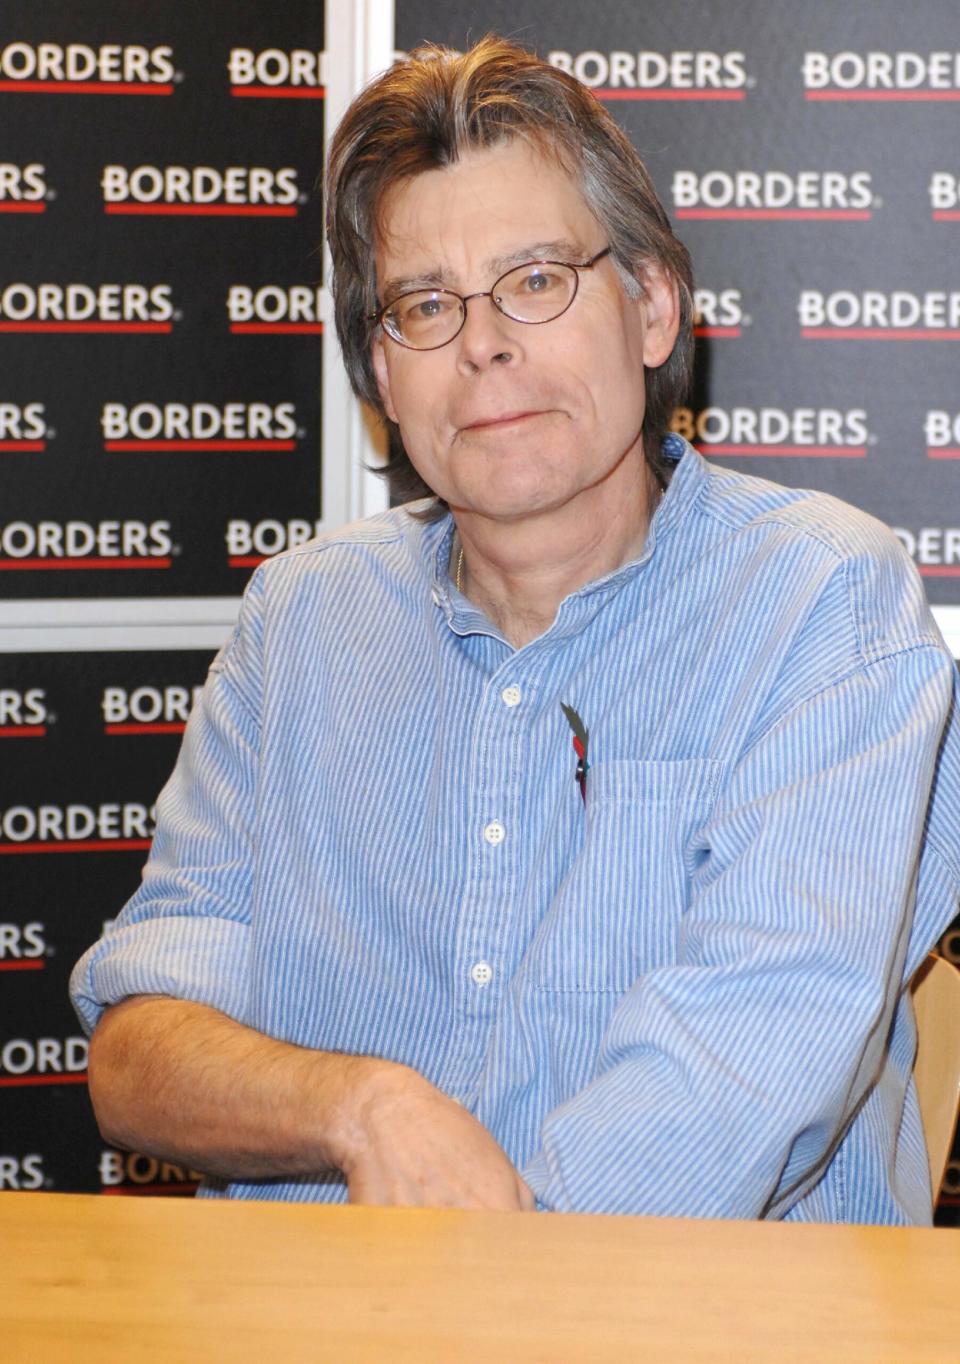 Stephen King signing copies of his new book 'Lisey's Story' at Borders on Oxford StreetLondon, England - 07.11.06Credit: WENN Newscom/(Mega Agency TagID: wennphotos422079.jpg) [Photo via Mega Agency]